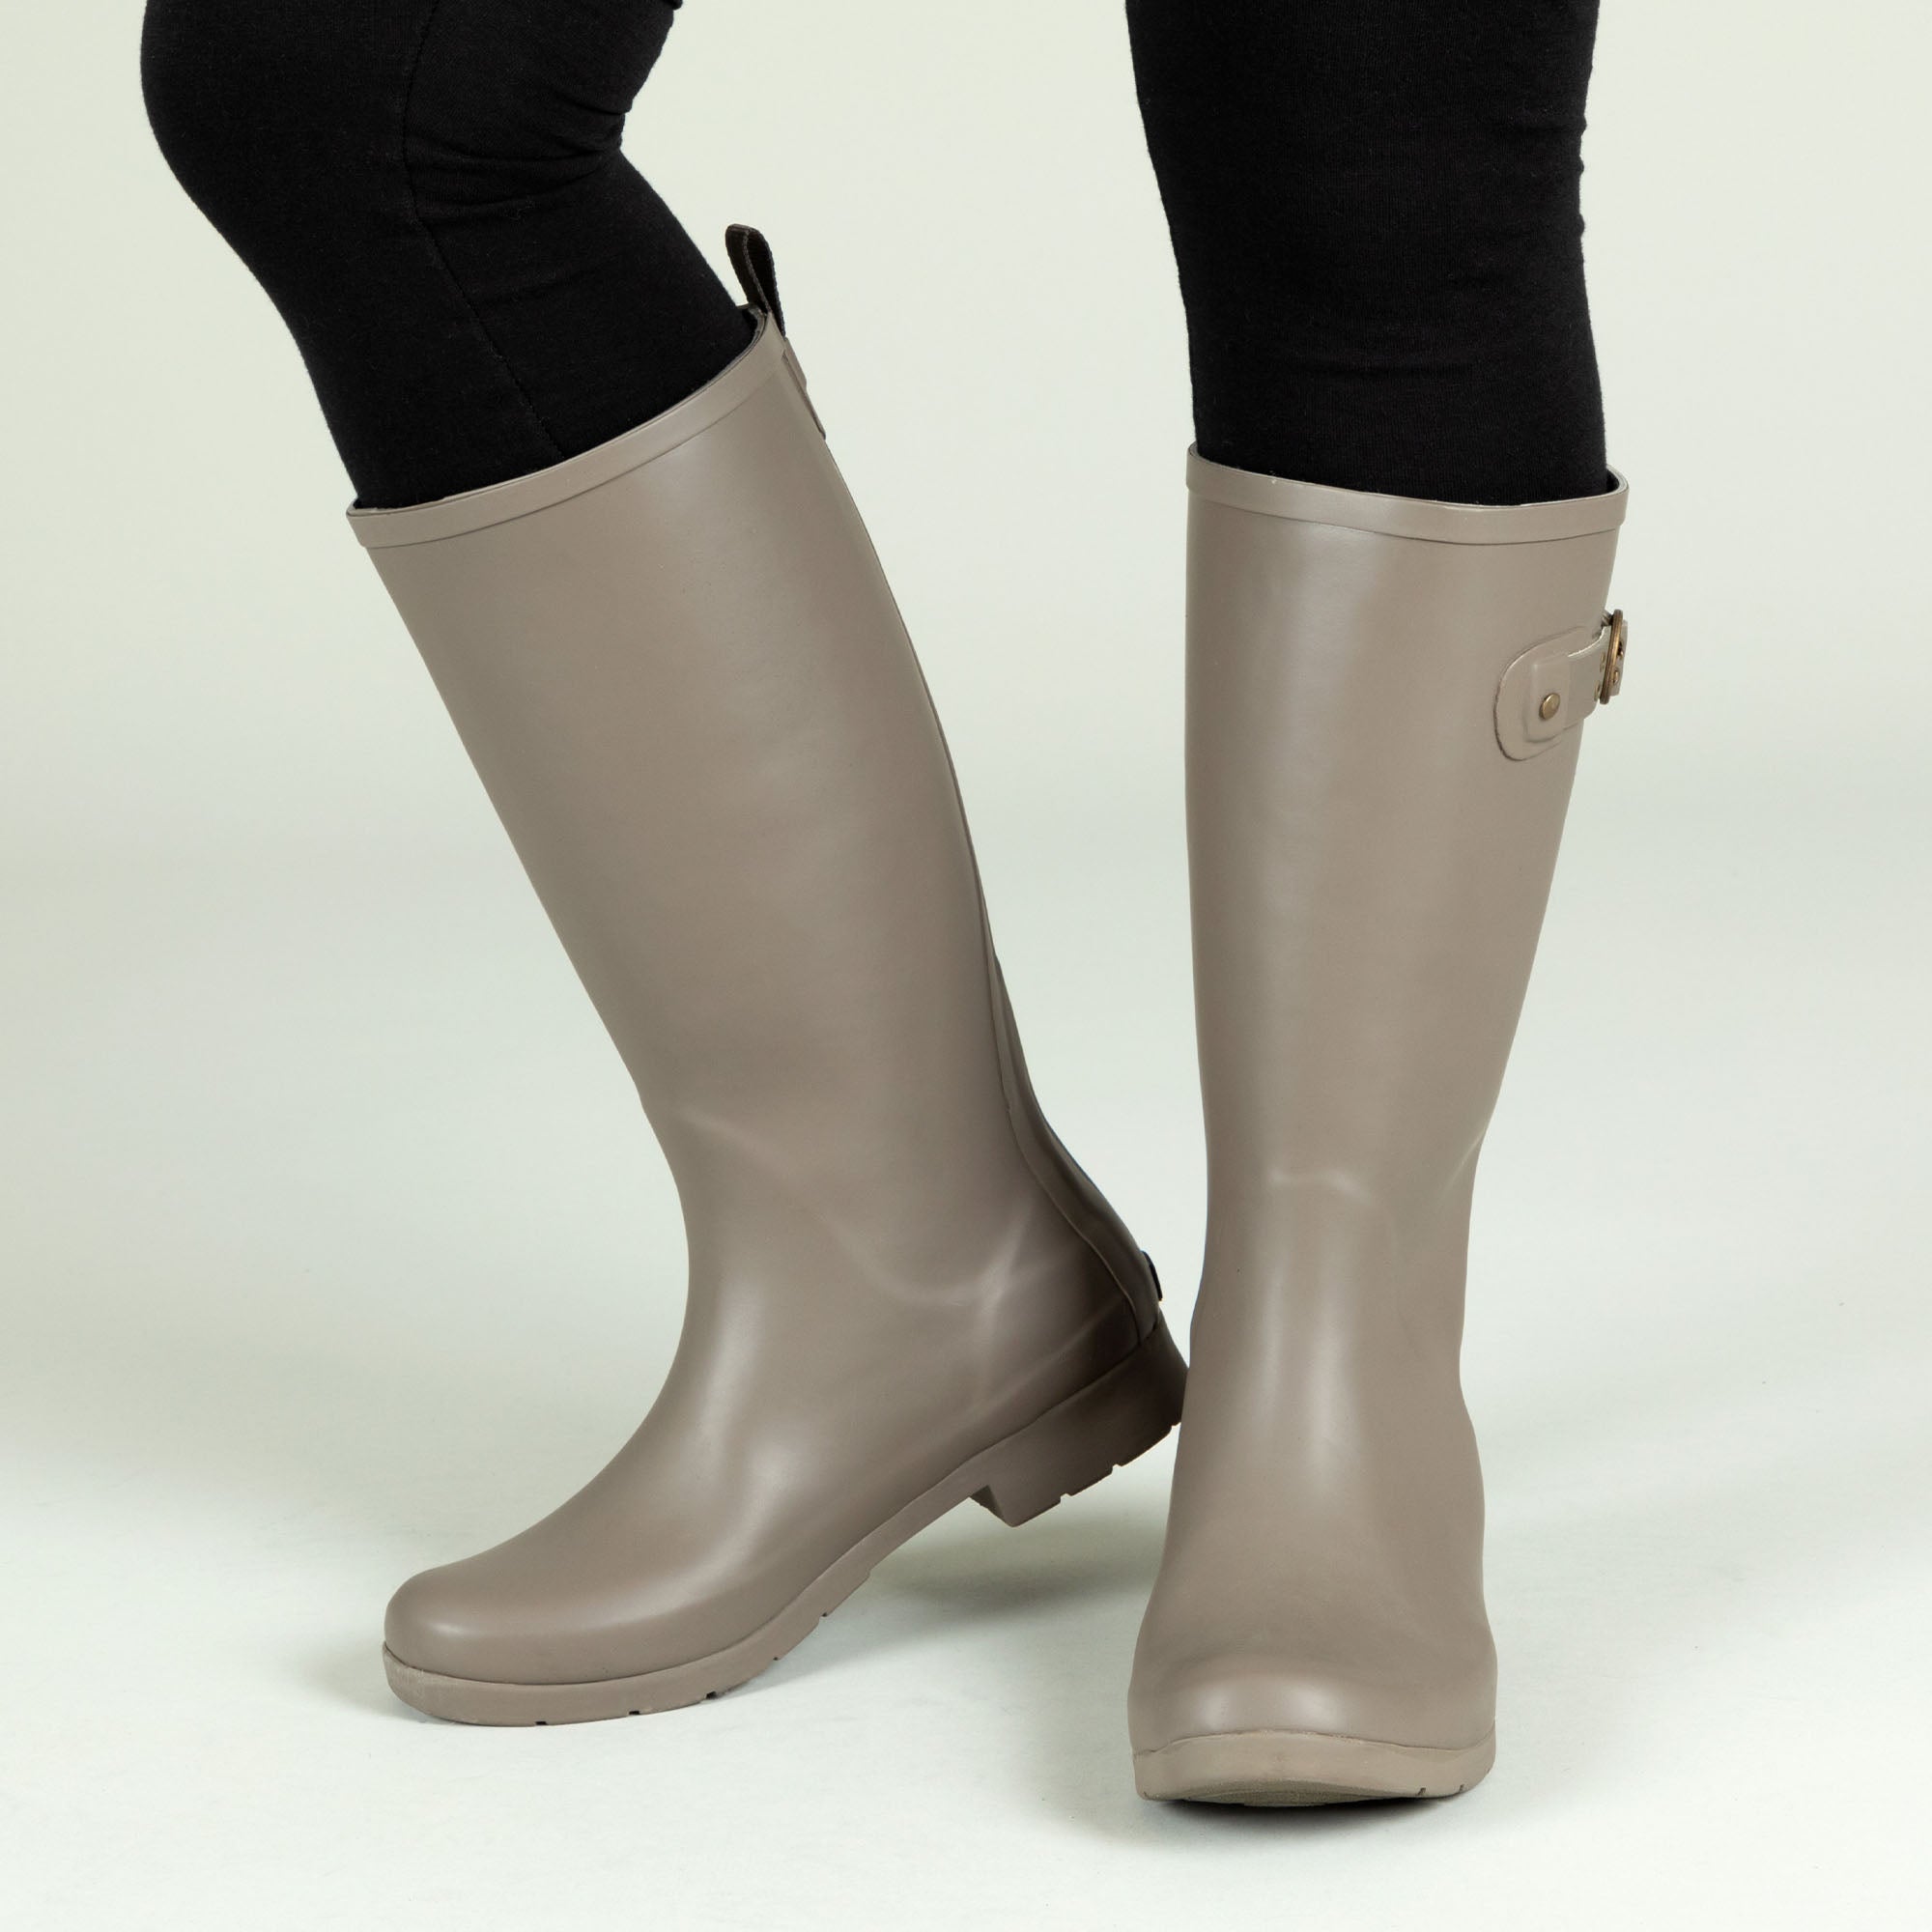 Eastlake Classic Tall Rain Boots - Taupe - 9